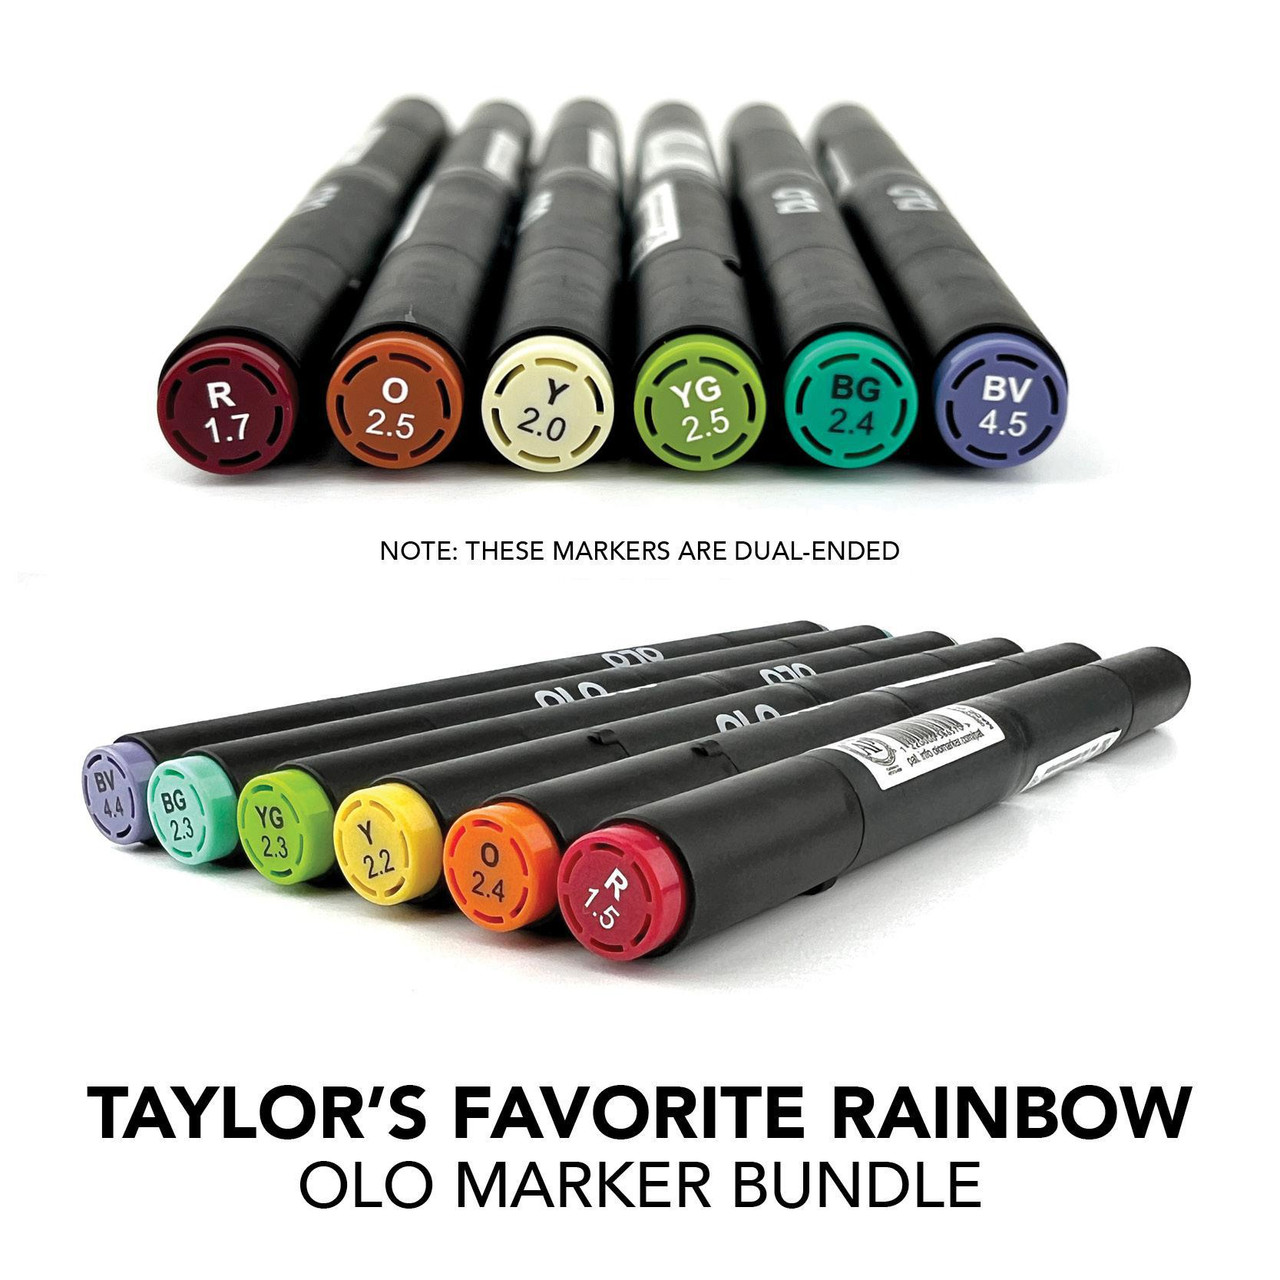 OLO Teal Tones Alcohol Markers Set - 8 Colors 4pc. - Default Title -  Spellbinders Paper Arts